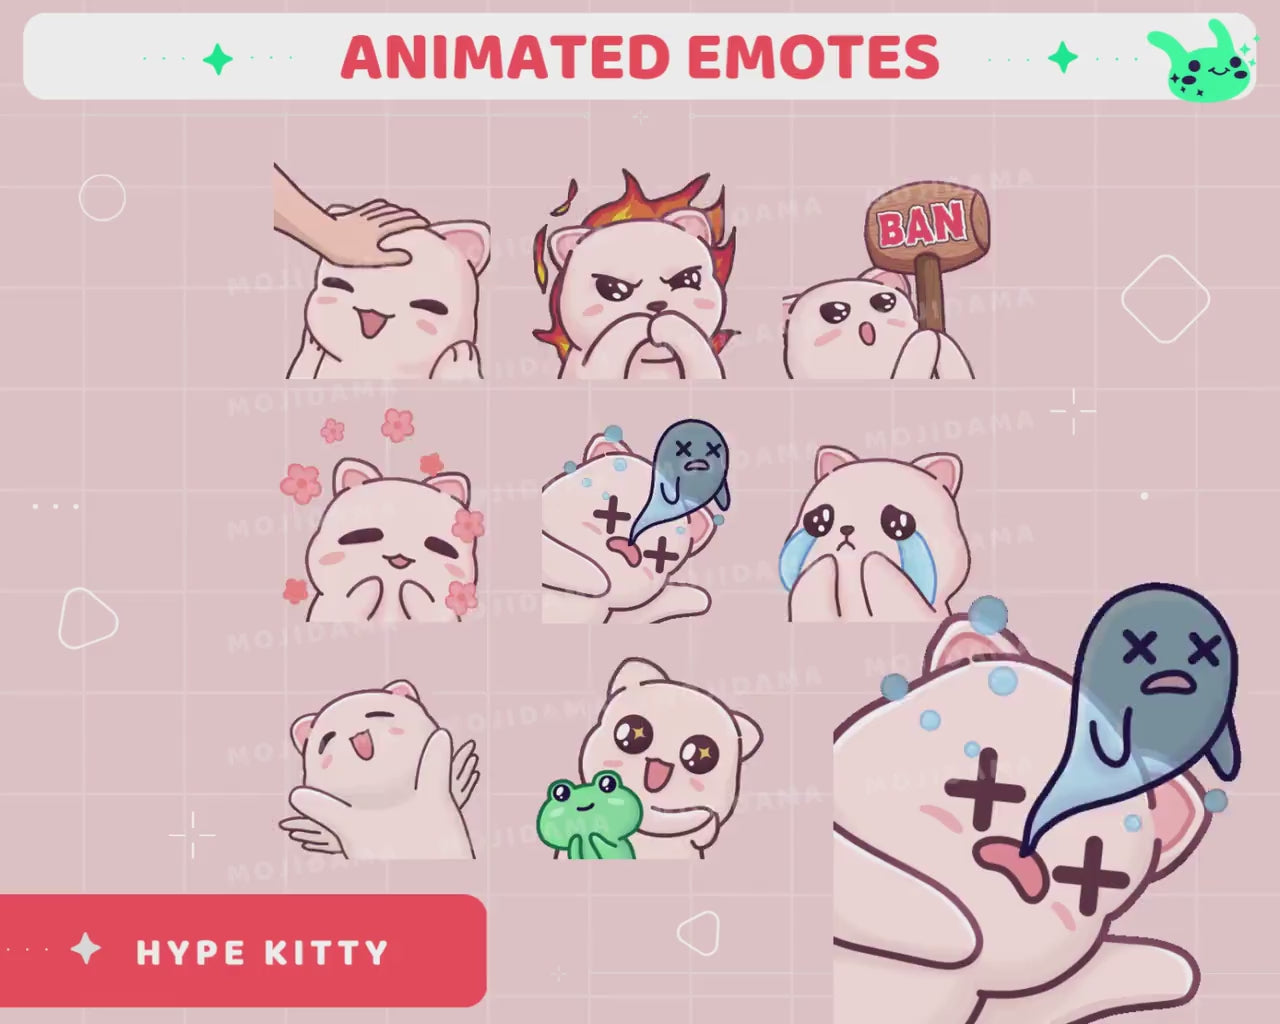 Cat Emotes Animation Hype Kitty Funny Dancing Animated Cute Animal Emote Sticker Stream Dance Gg Raid Lurk Bunny Ban Sad Twitch Kick Bundle